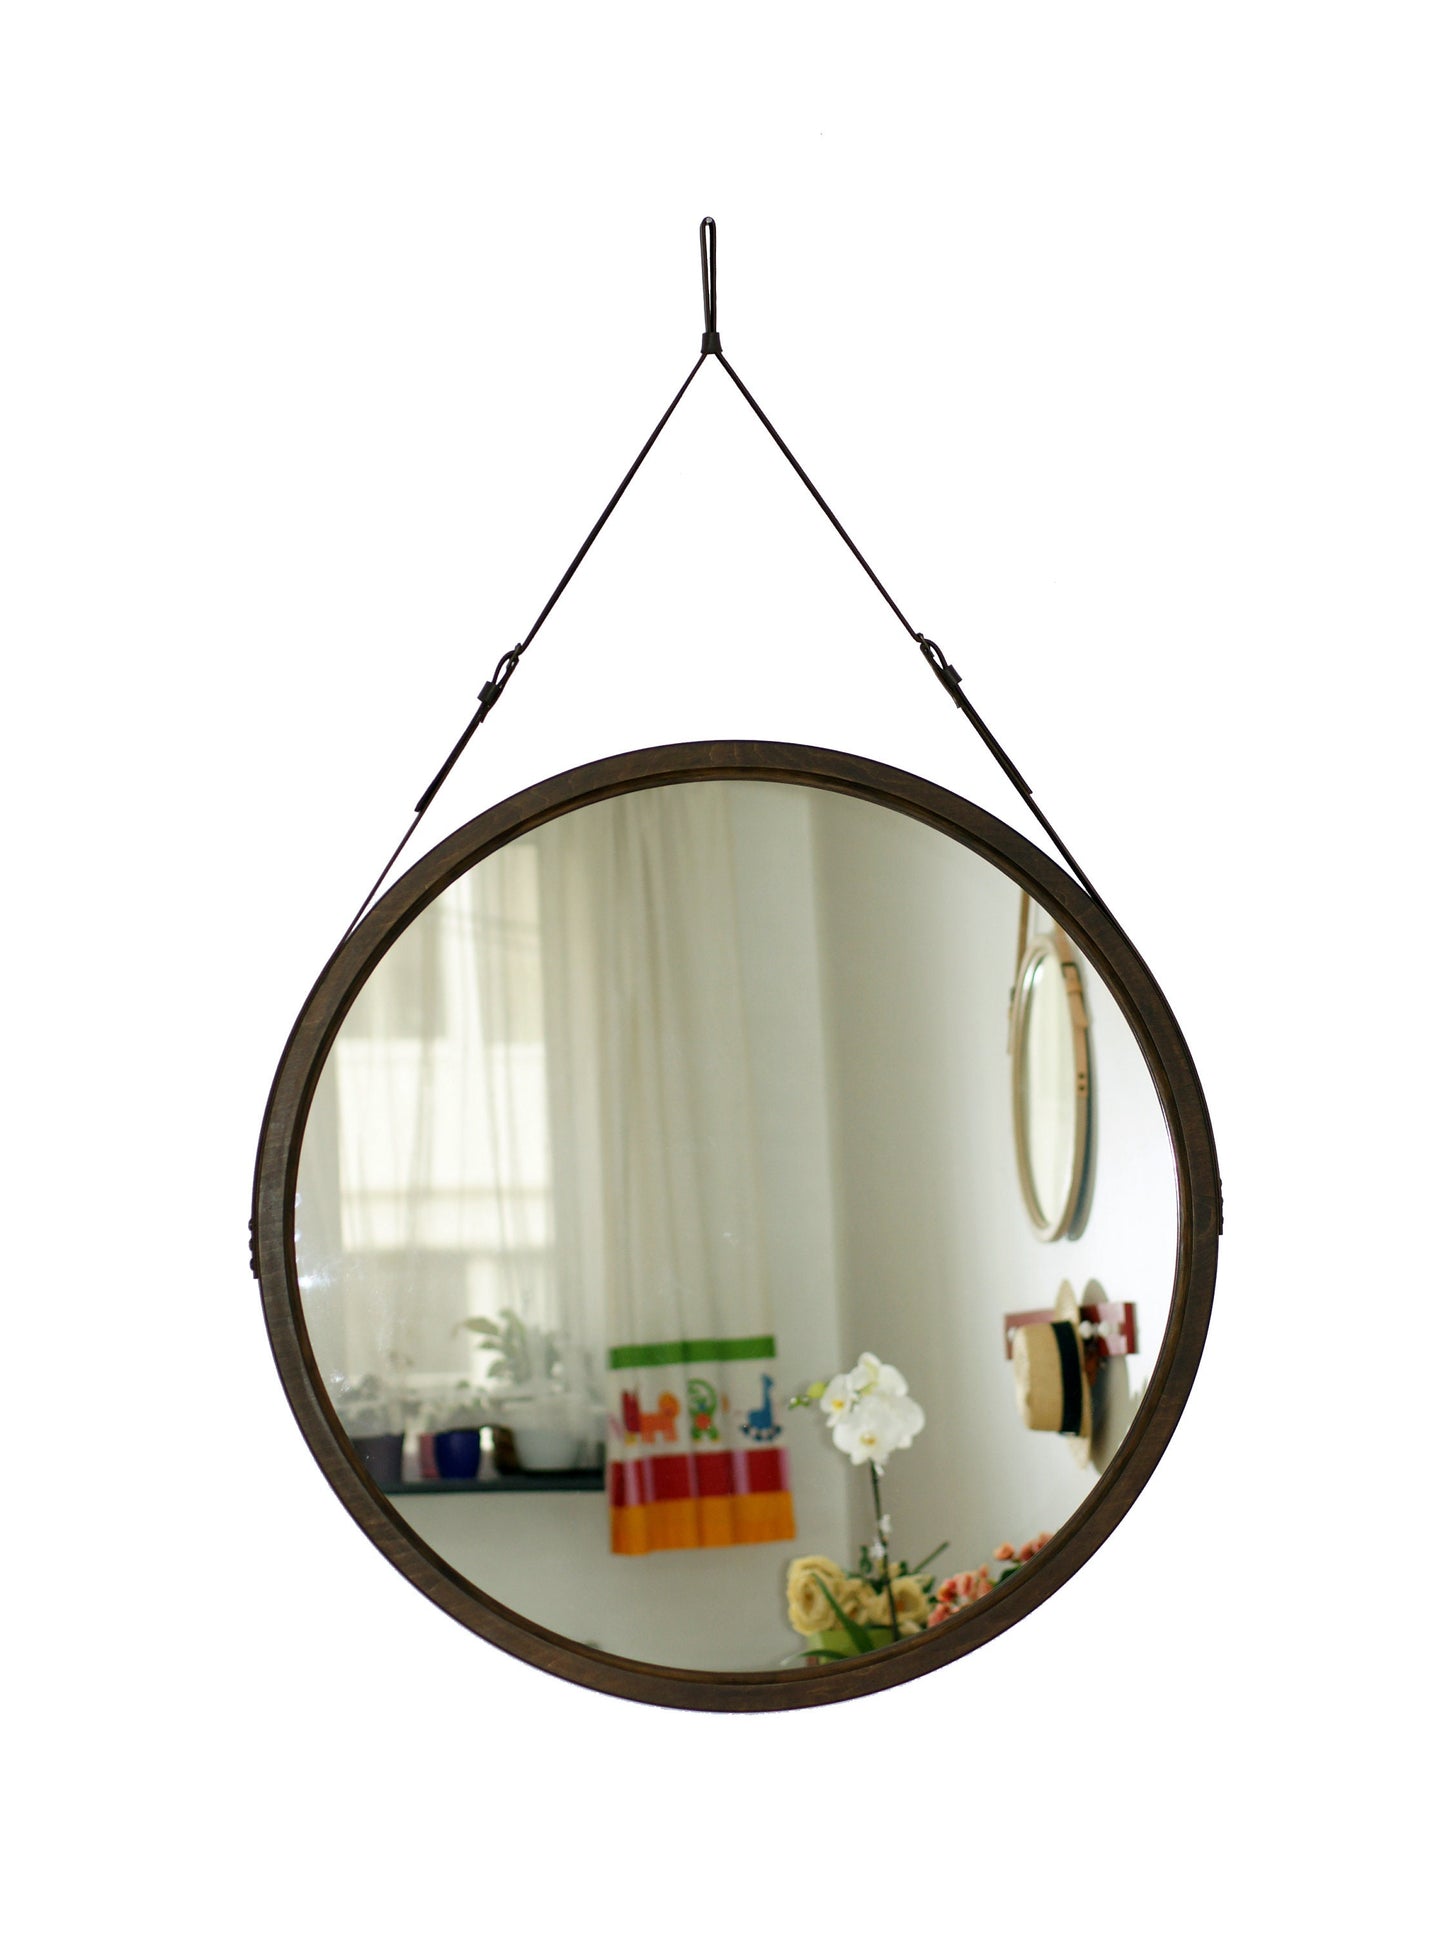 Wood bathroom mirror for wall decor, Farmhouse mirror from wood, Leather mirror, Decorative mirror, Large wall hanging mirror, Modern mirror